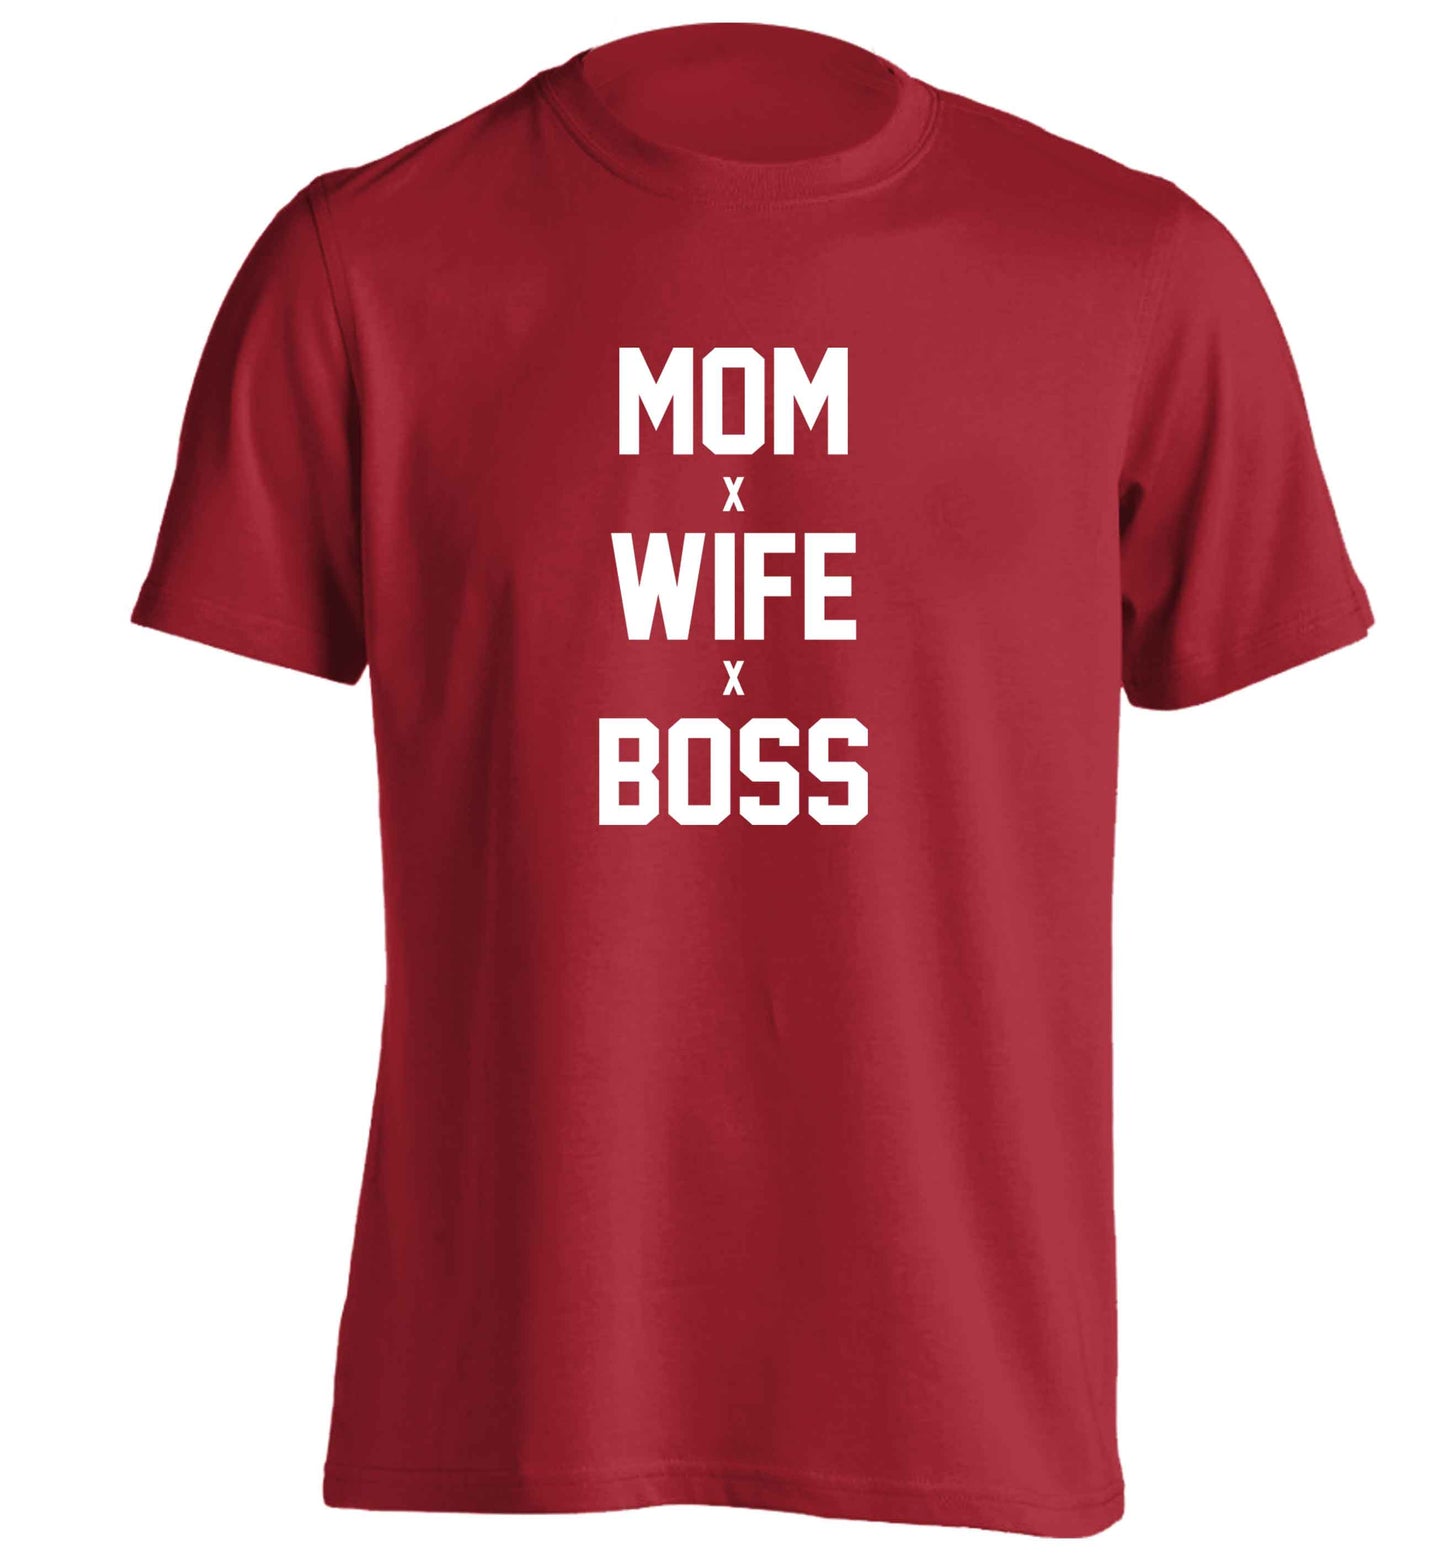 Mum wife boss adults unisex red Tshirt 2XL